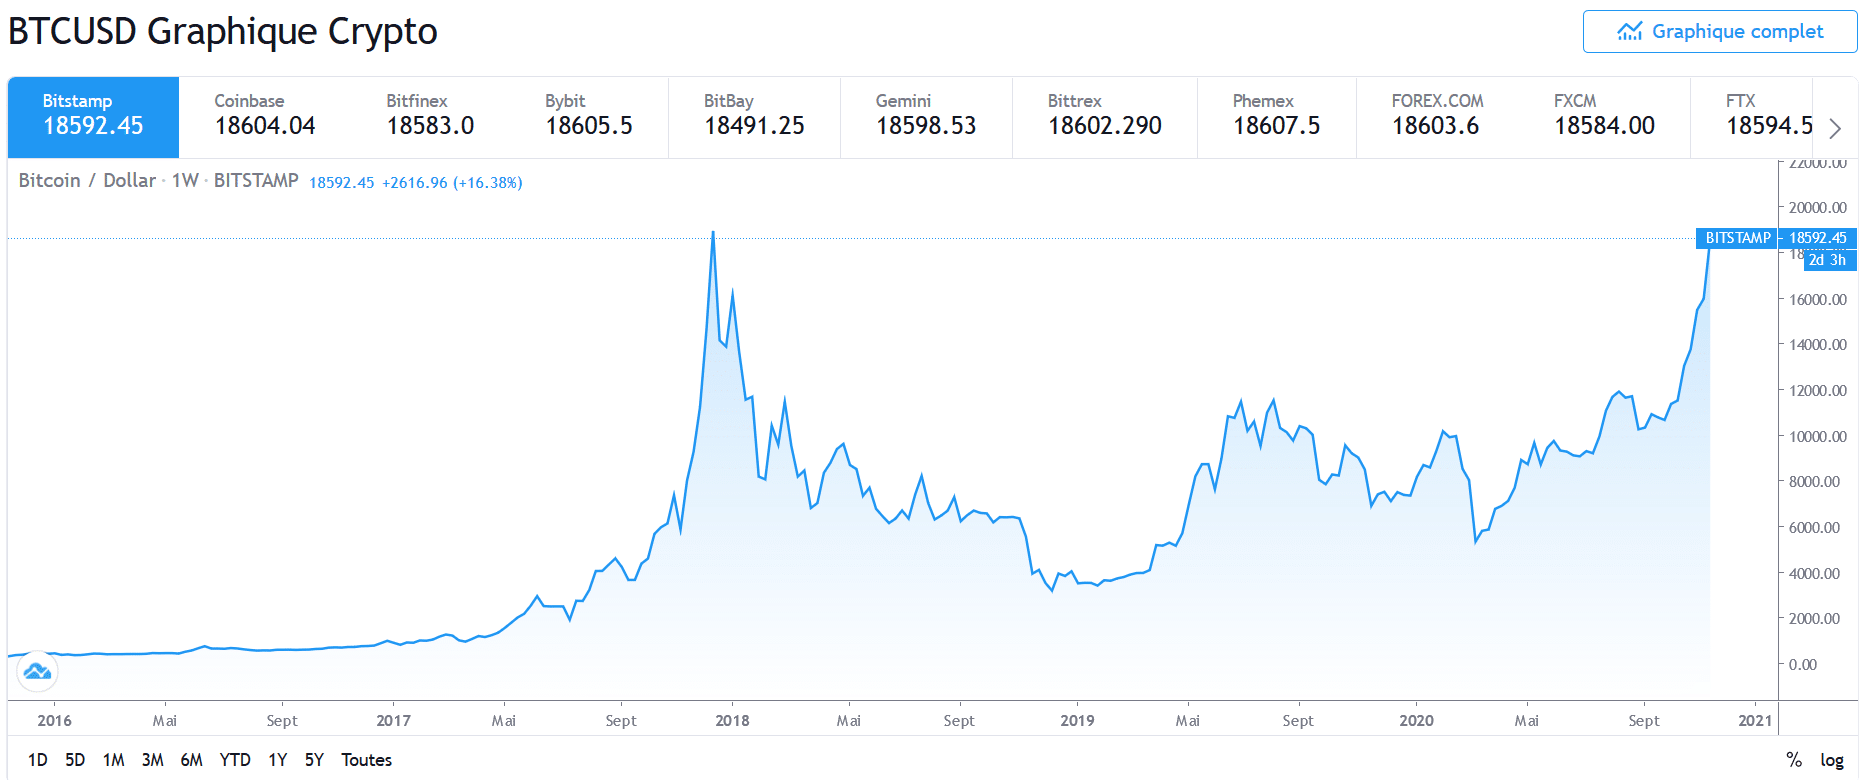 current price per bitcoin